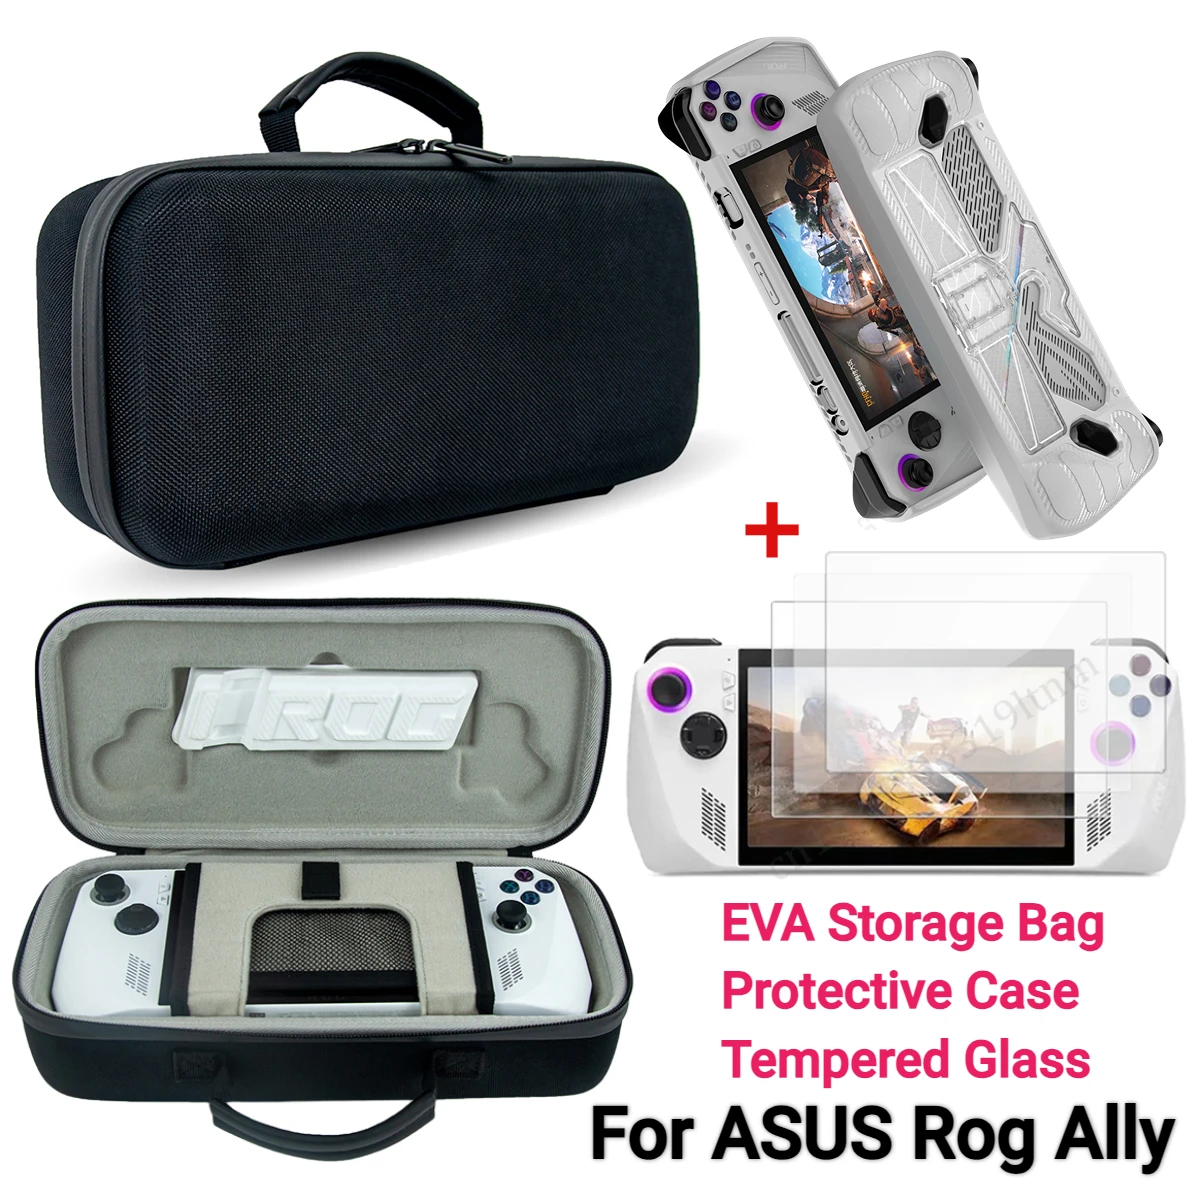 Protective Carrying Case for Asus ROG Ally Hard Shockproof Storage Bag